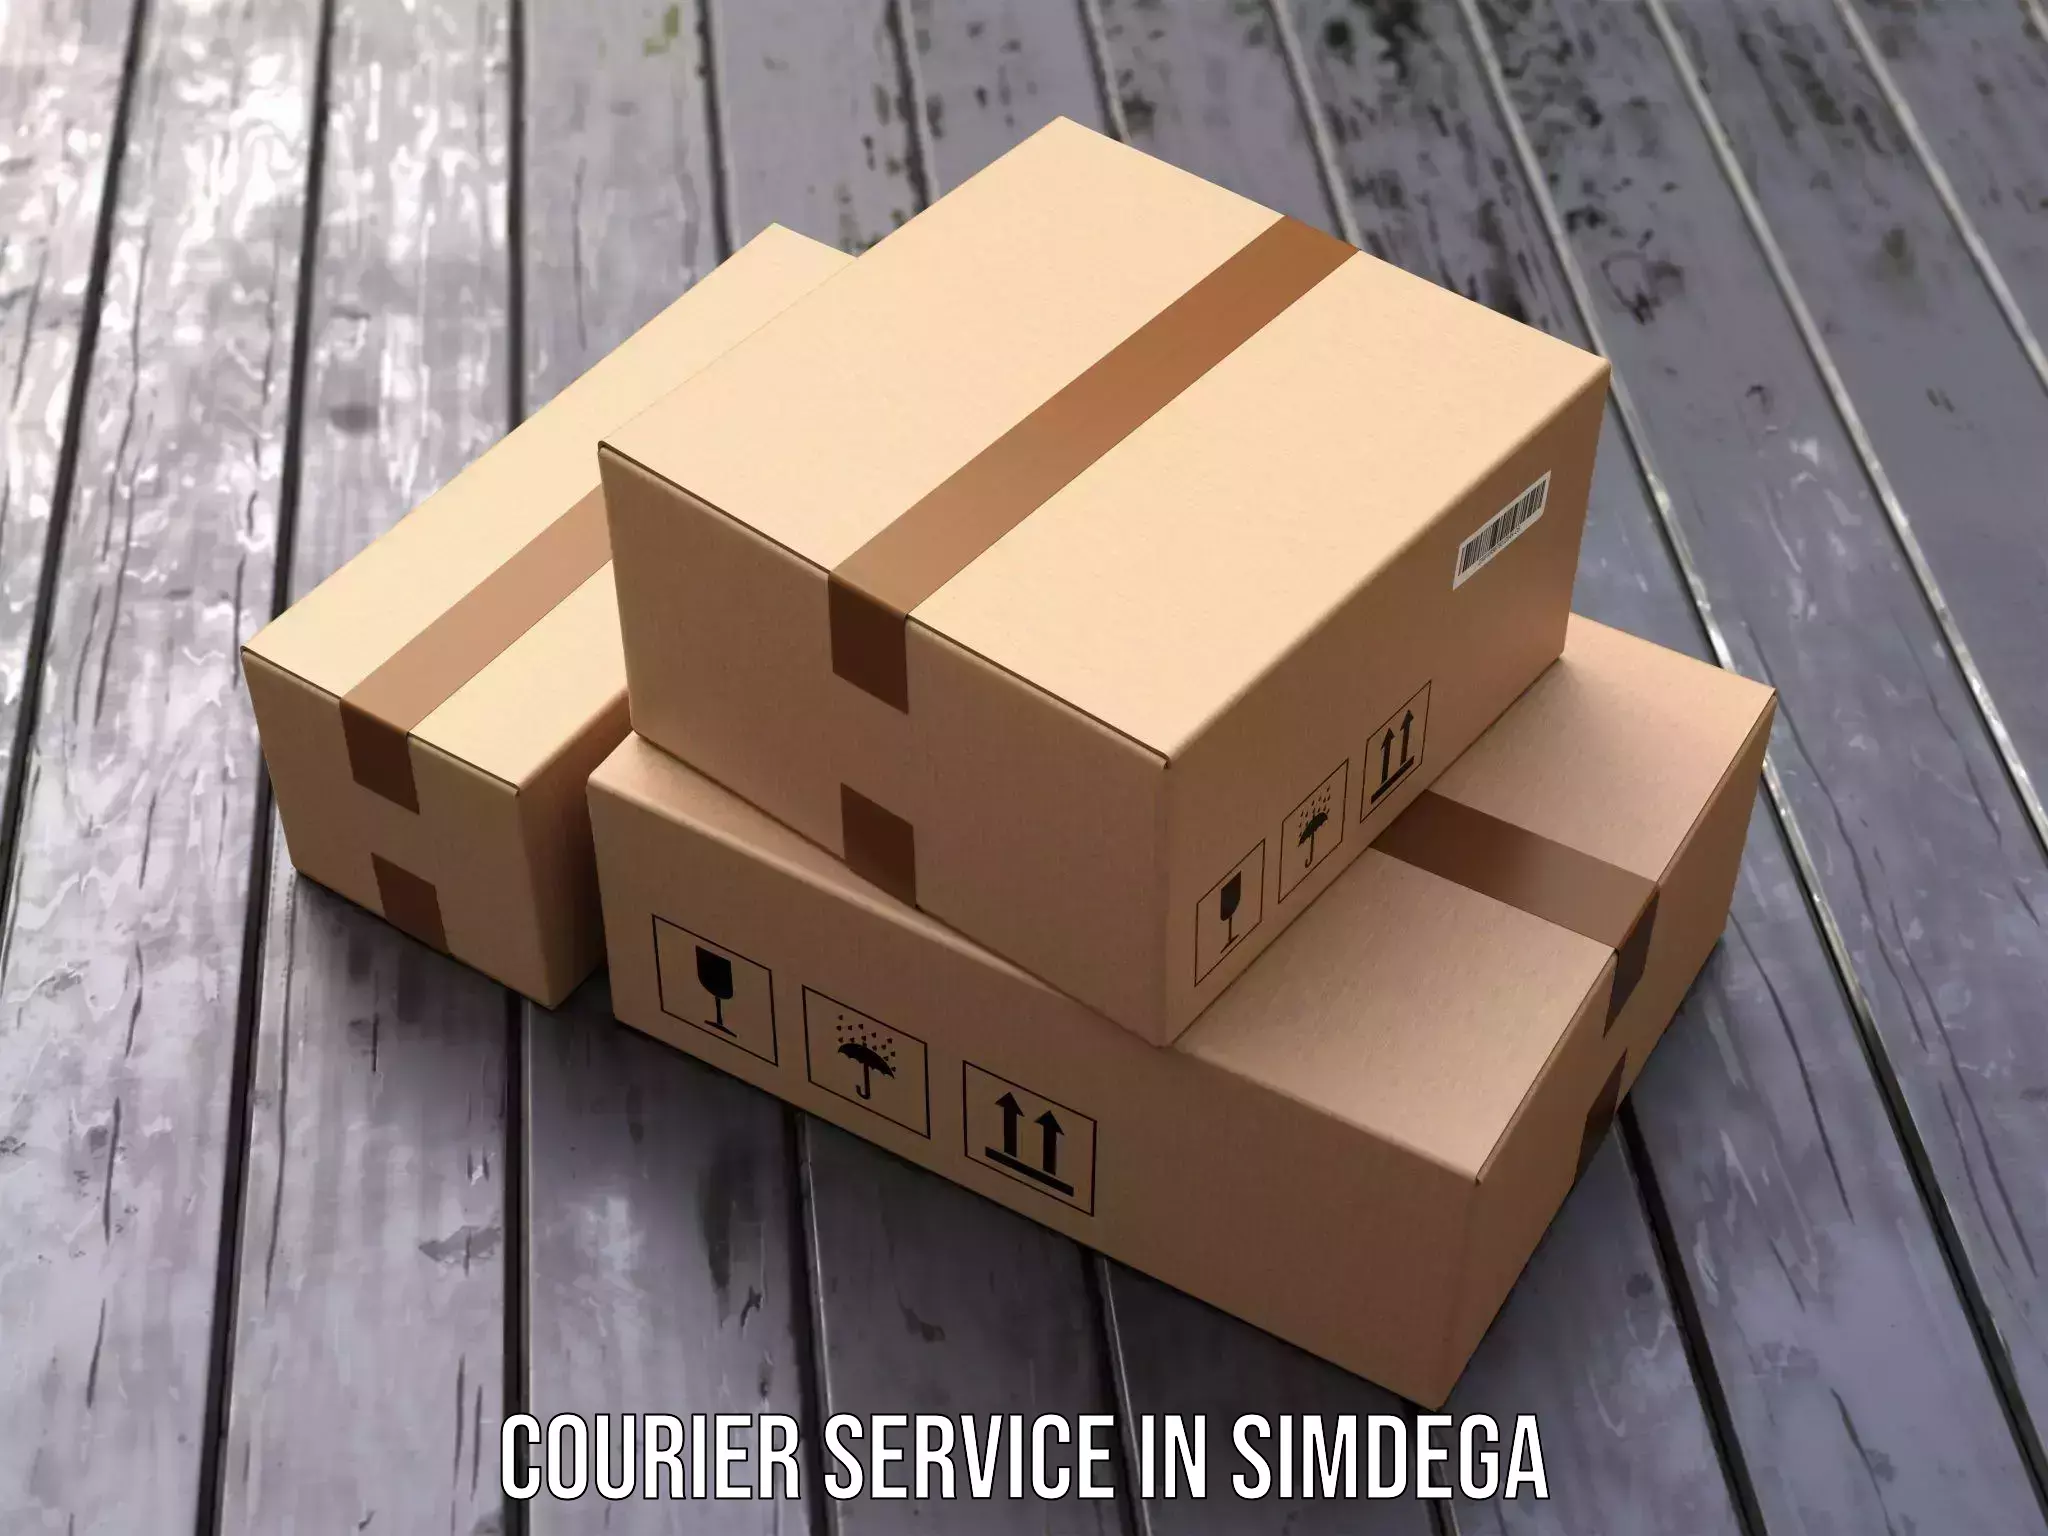 Efficient order fulfillment in Simdega